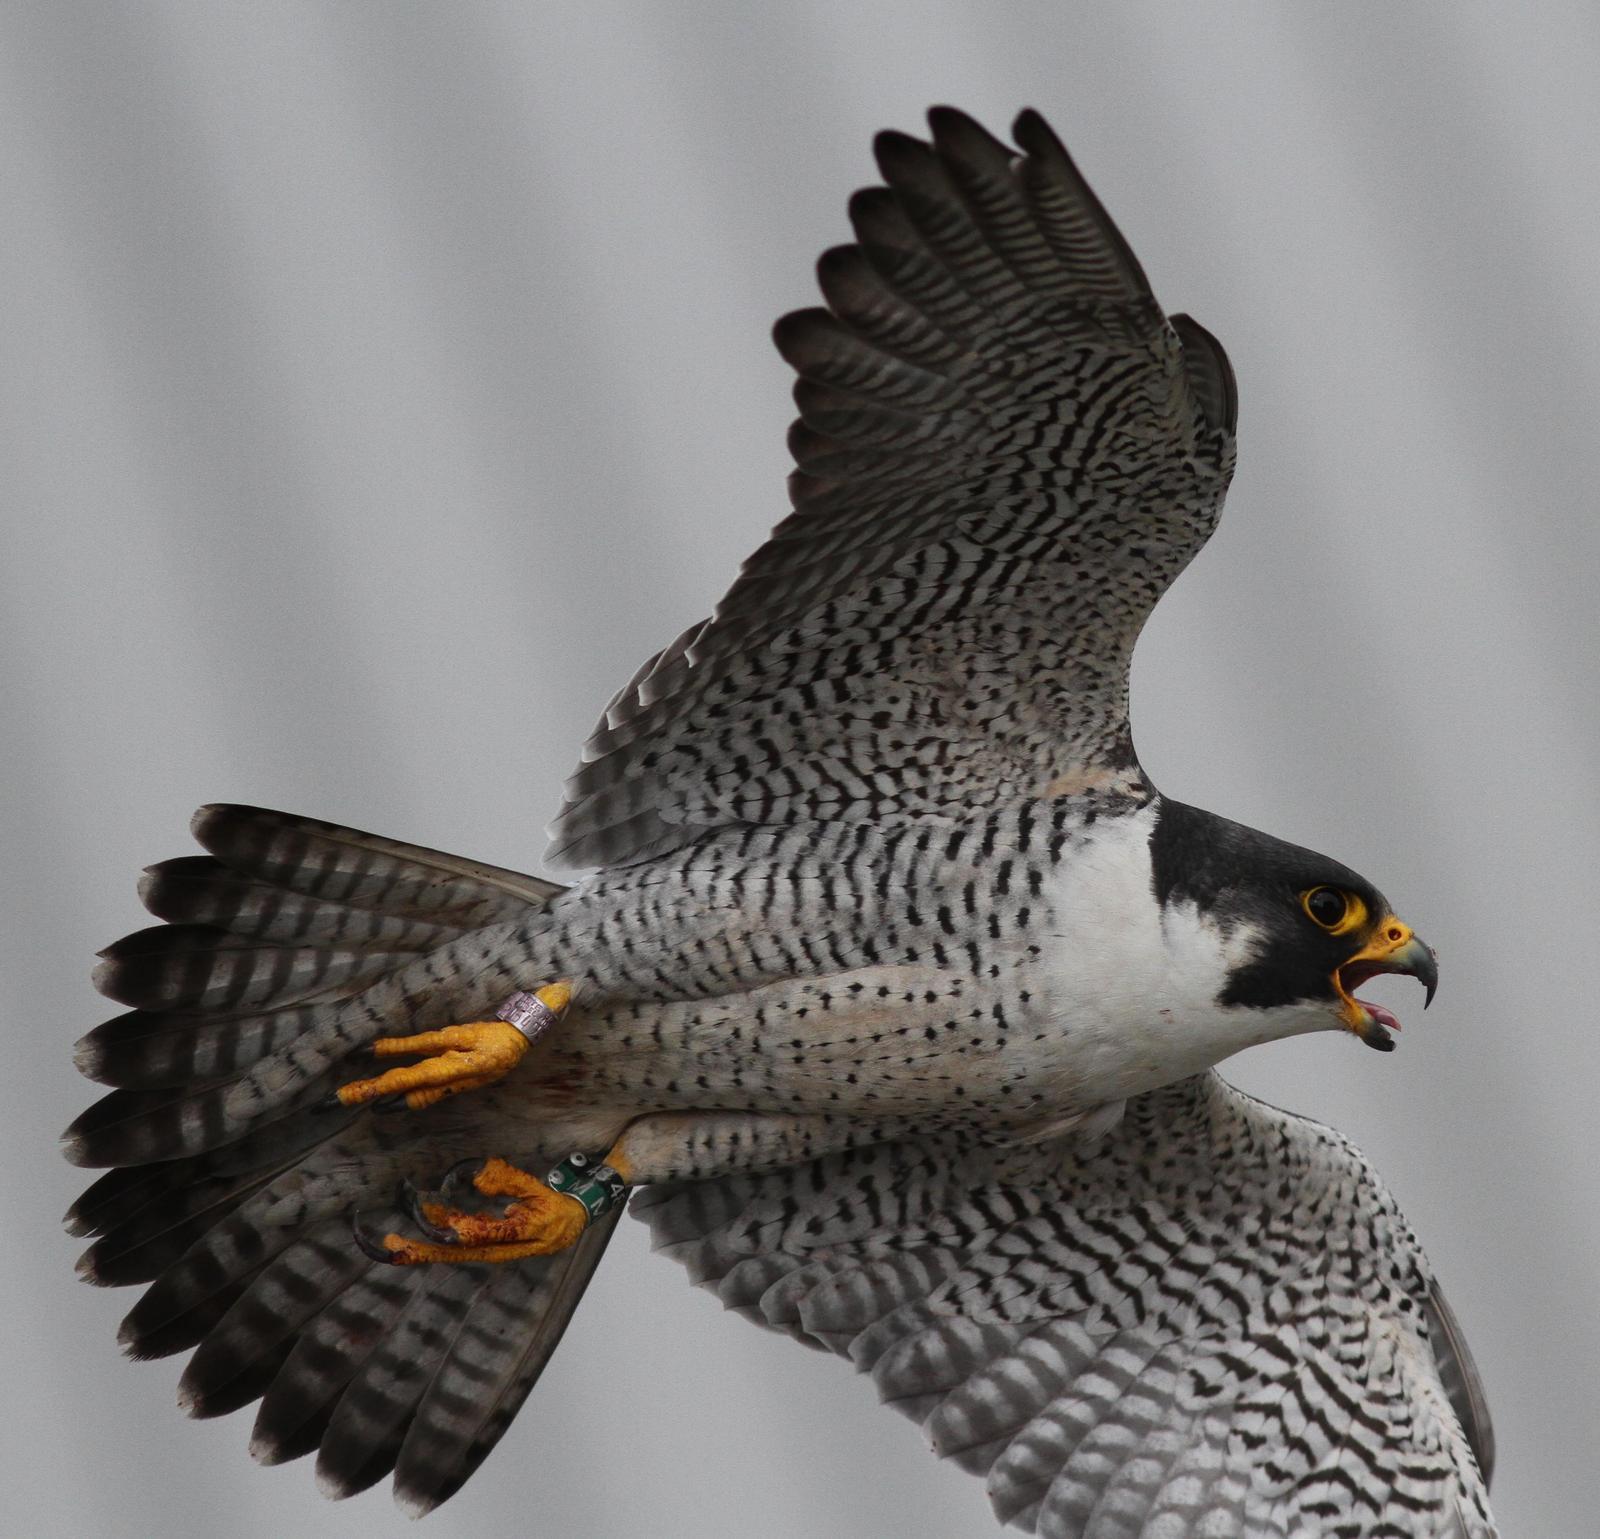 Peregrine Falcon (North American) Photo by Demayne Murphy